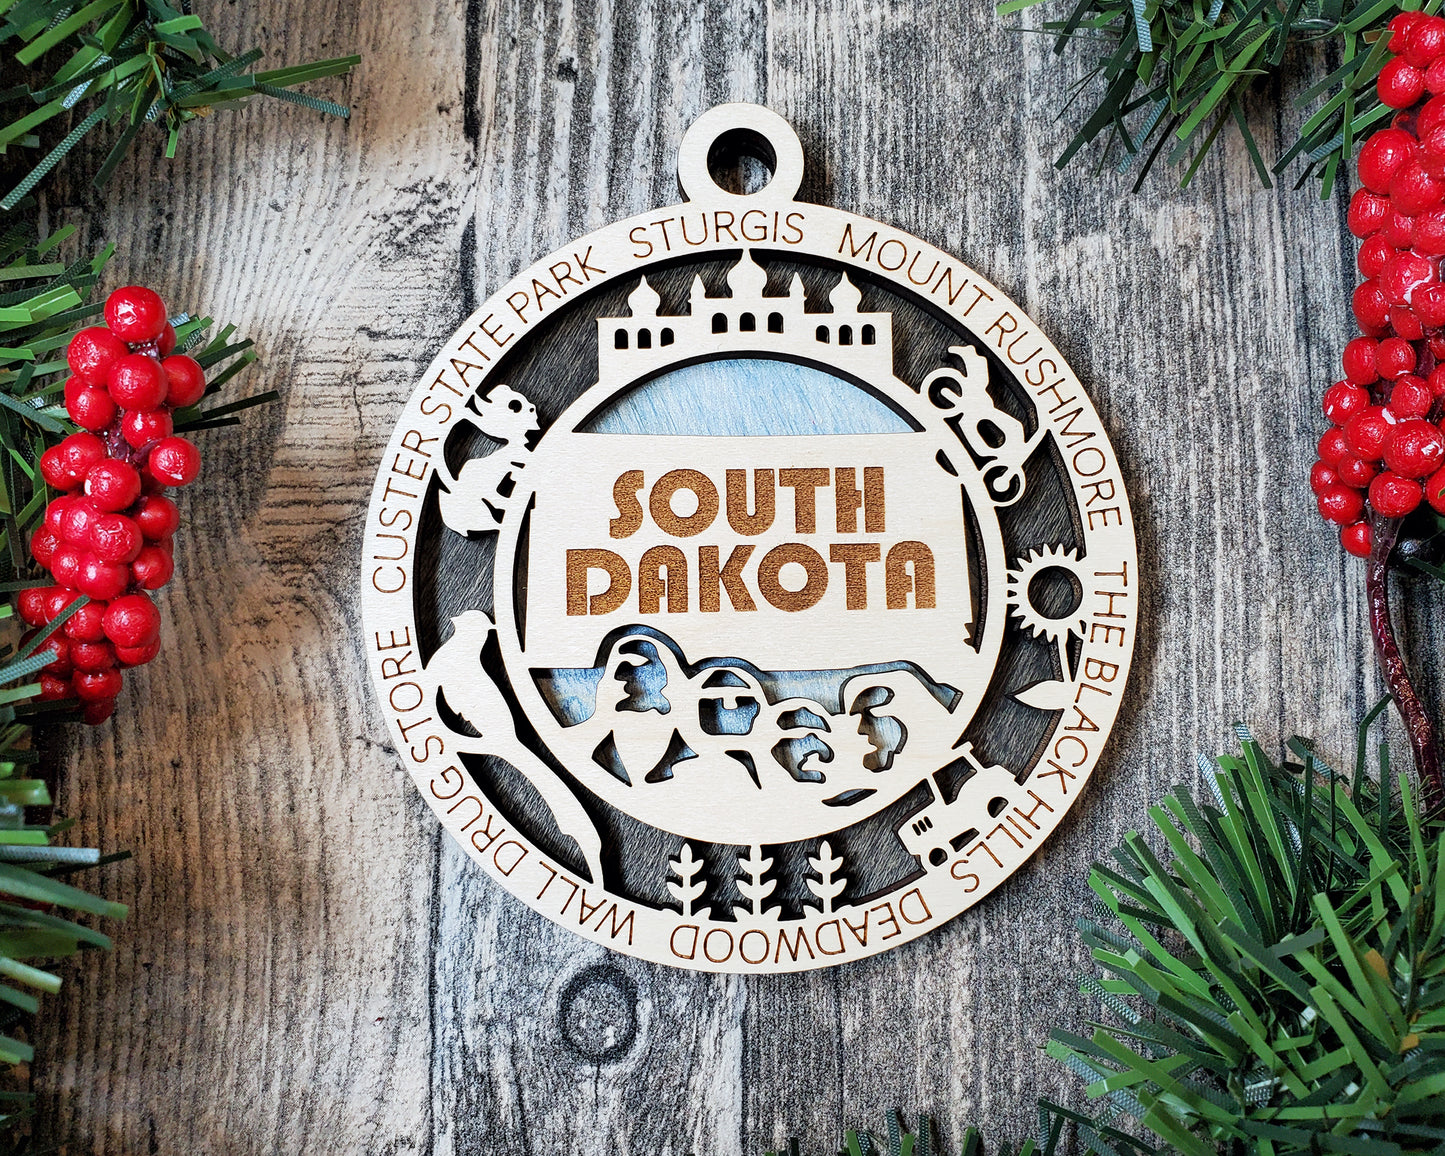 South Dakota ornament